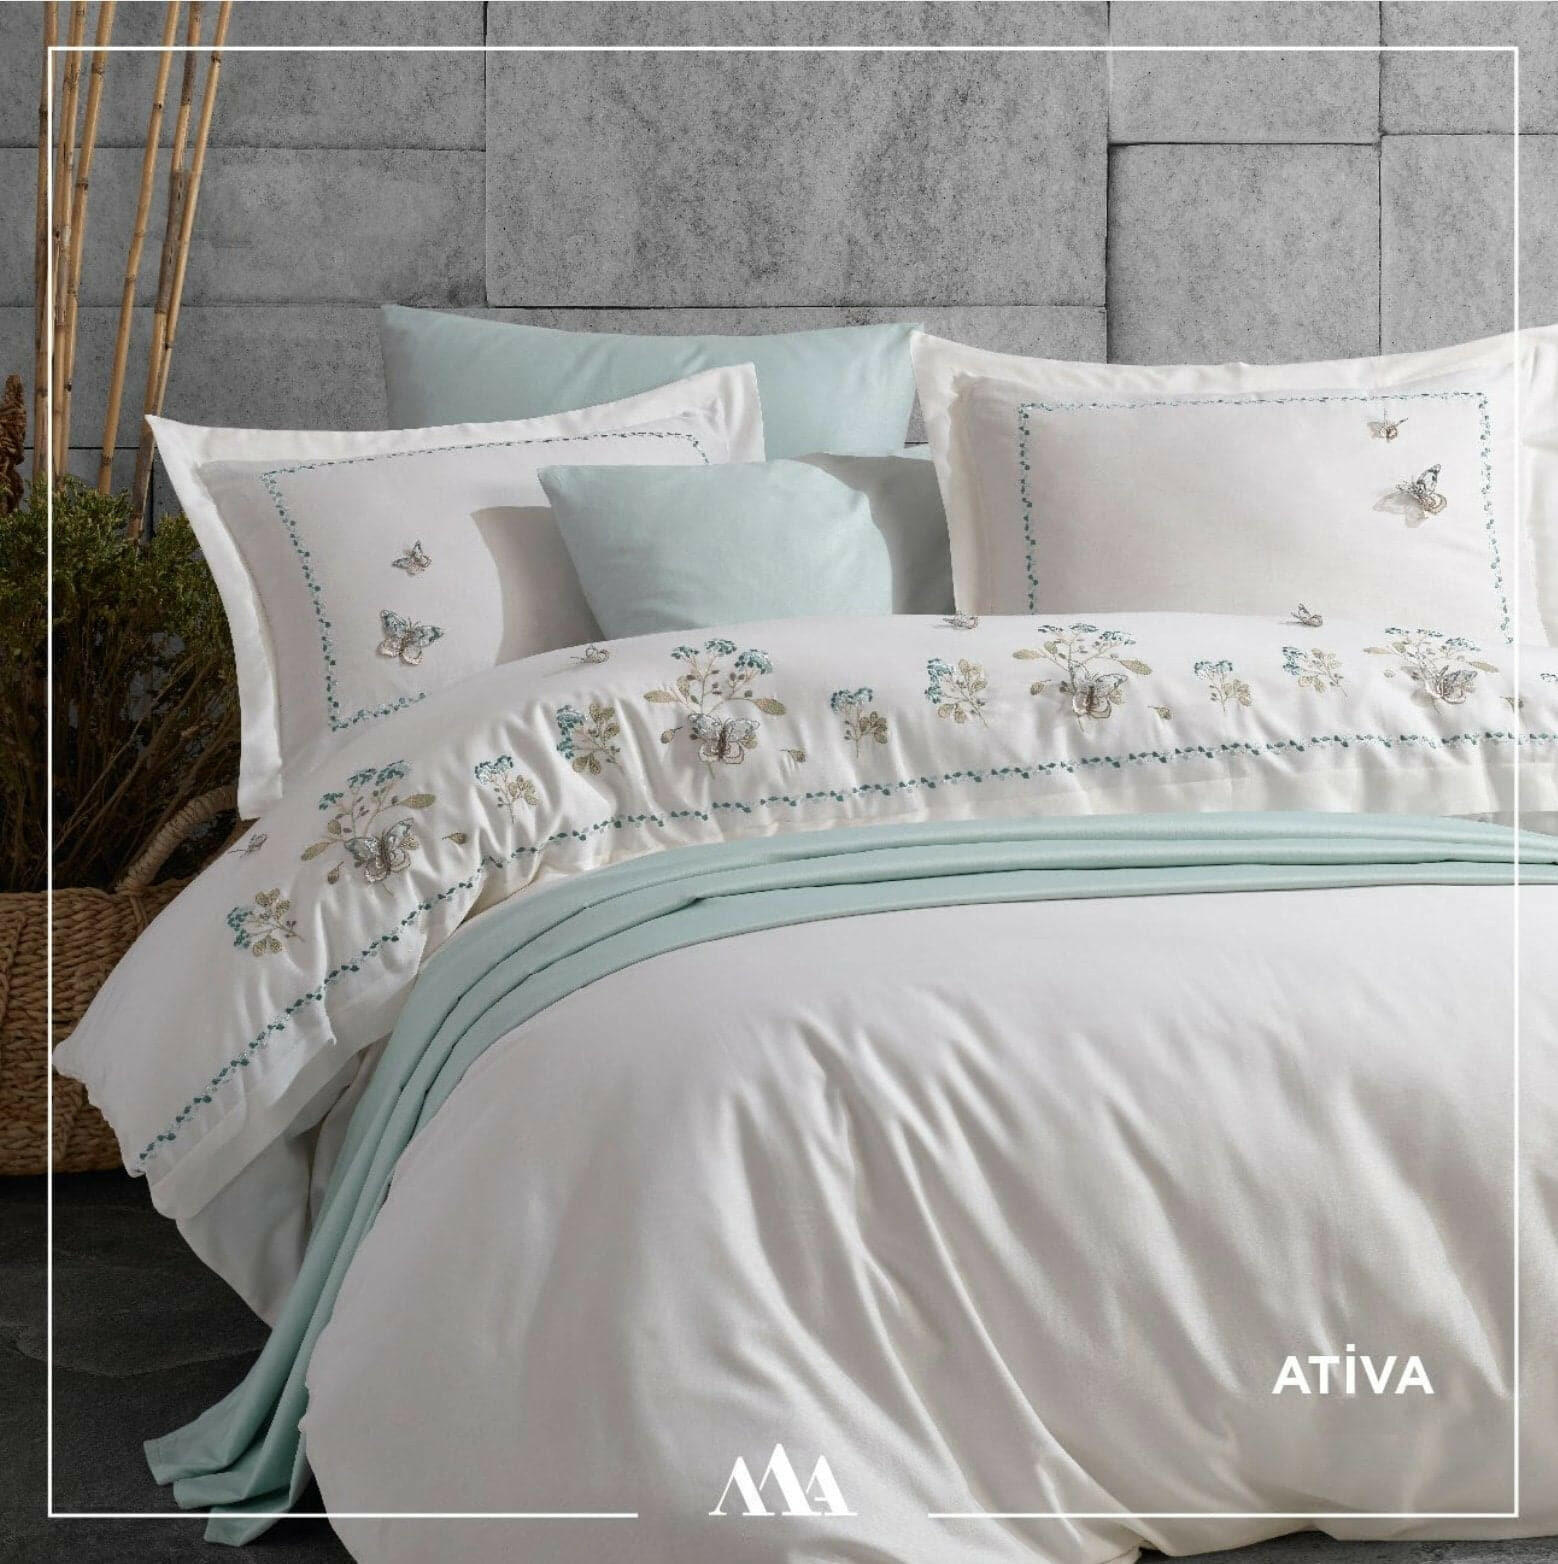 Maribor Ativa - Embroidered Luxury Duvet Cover Set - creativehome-designs